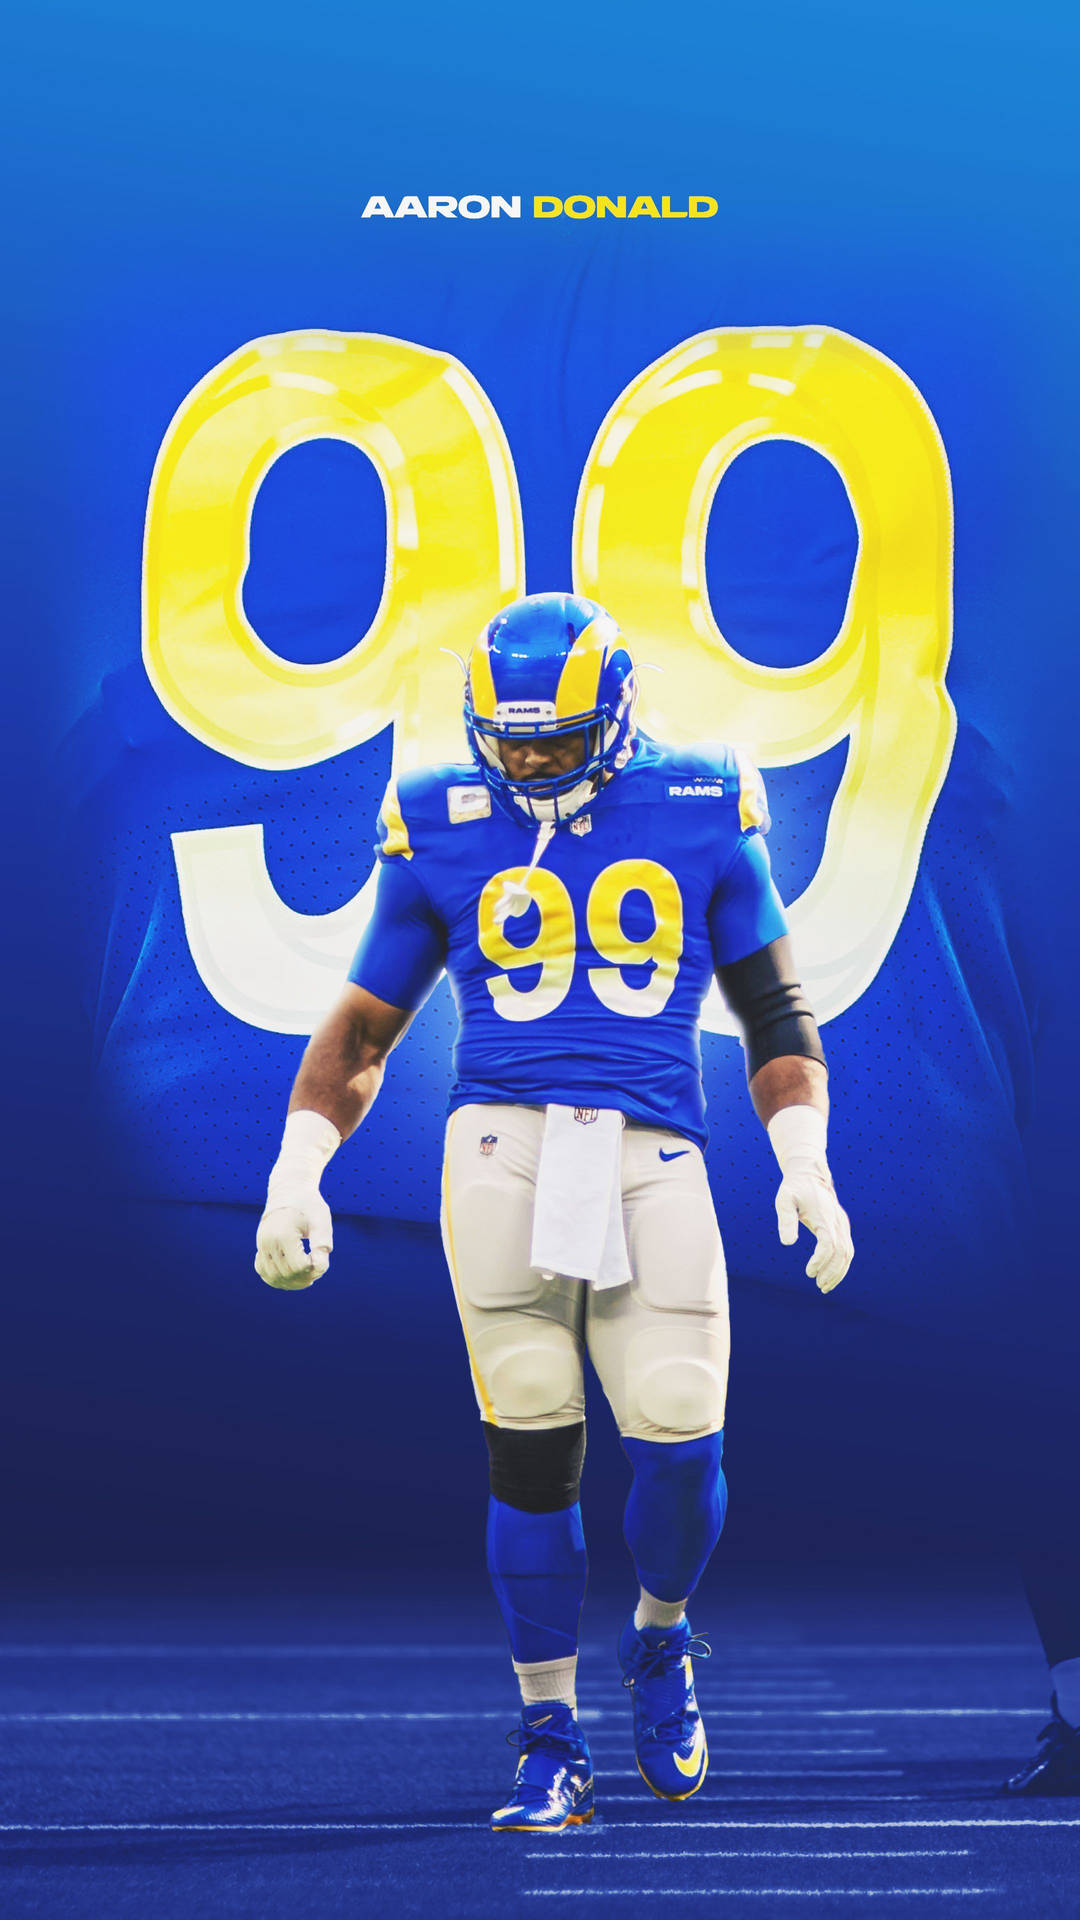 Los Angeles Rams Aaron Donald Jersey Number 99.